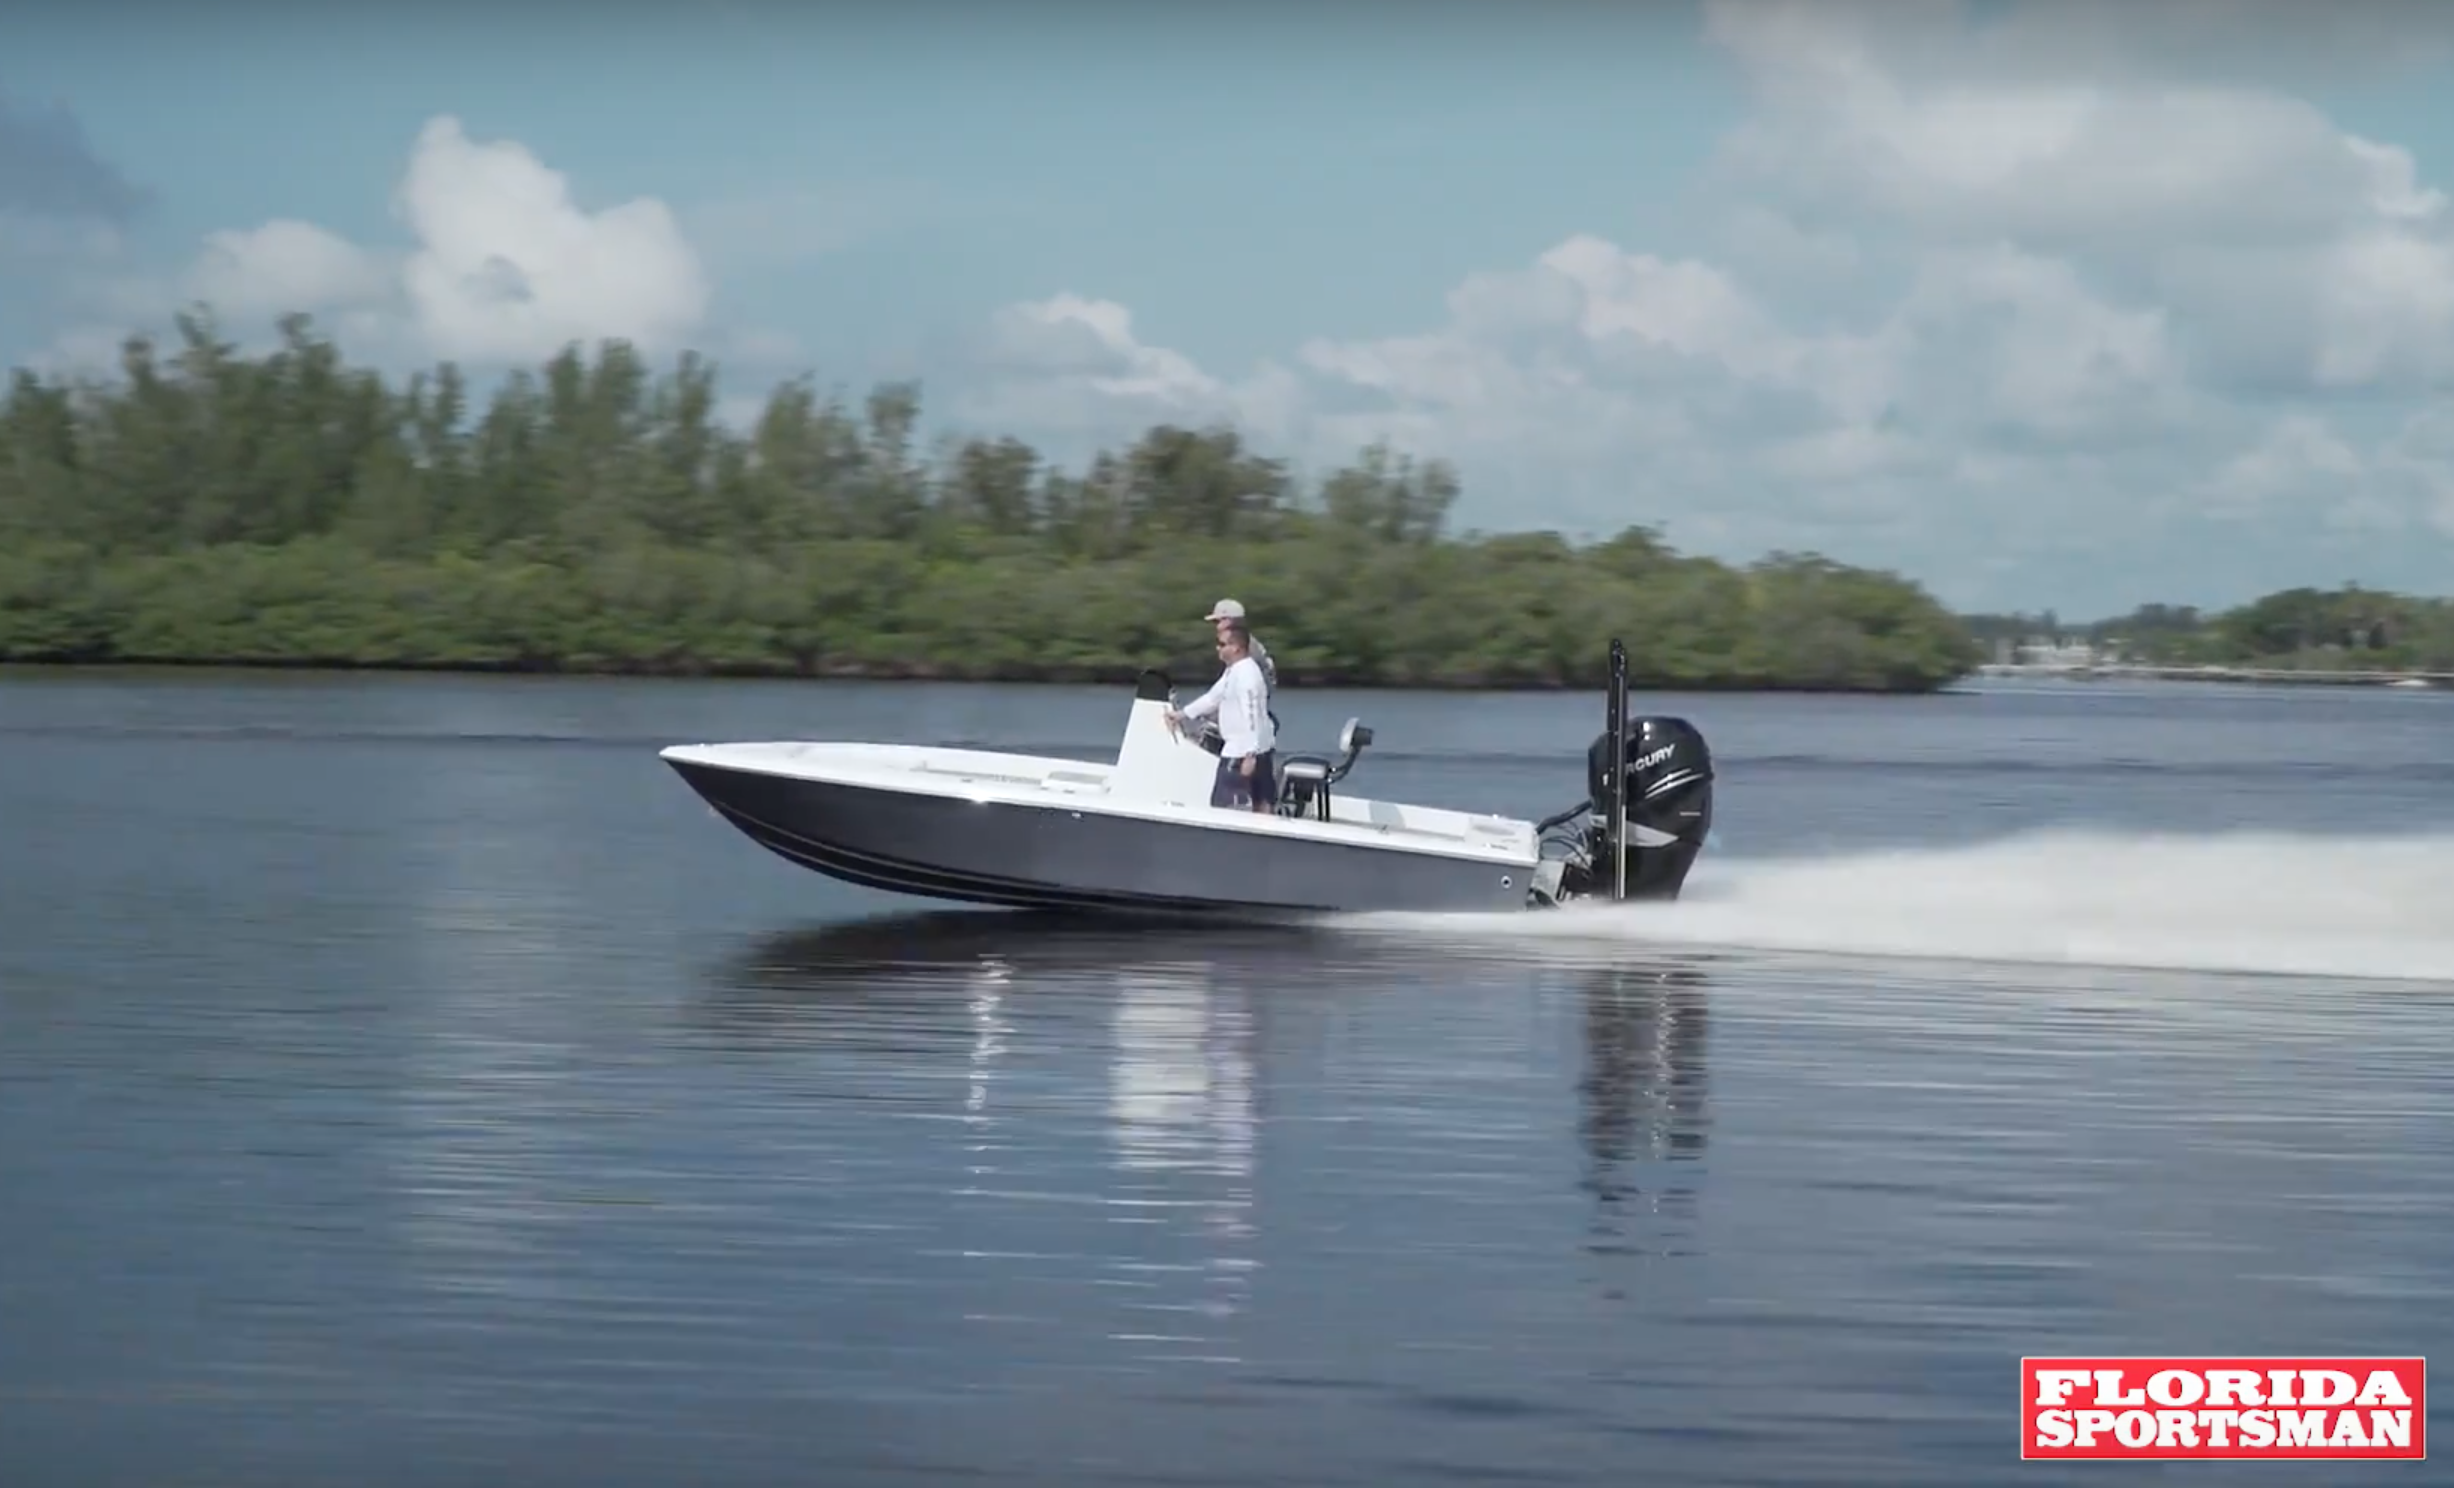 Florida Sportsman Project Dreamboat  - Paramount Splash, Cuda Craftsmanship